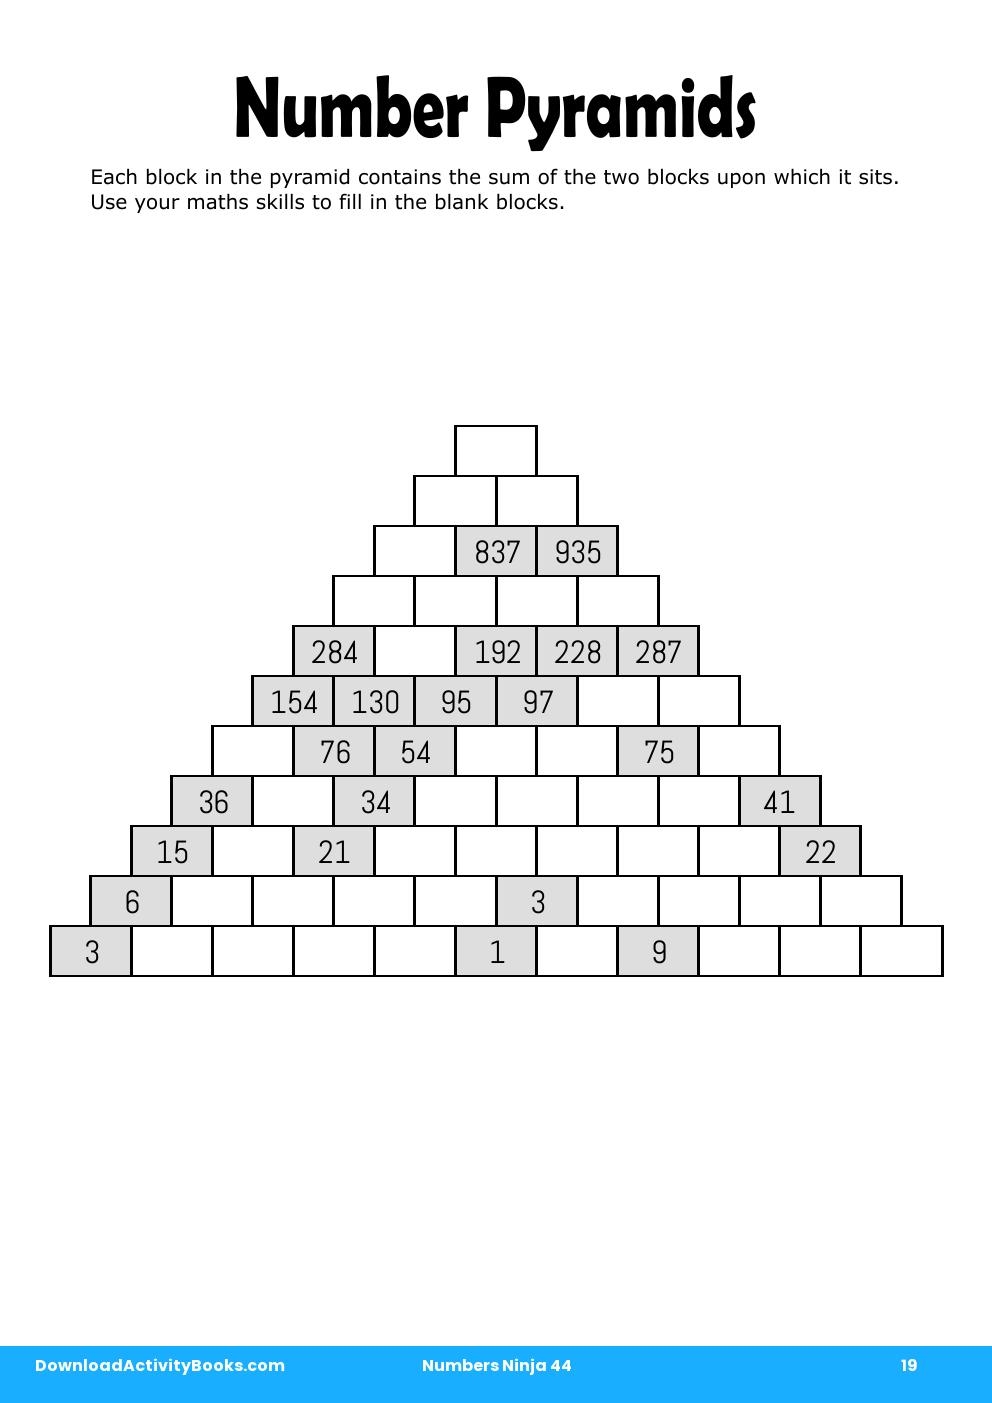 Number Pyramids in Numbers Ninja 44